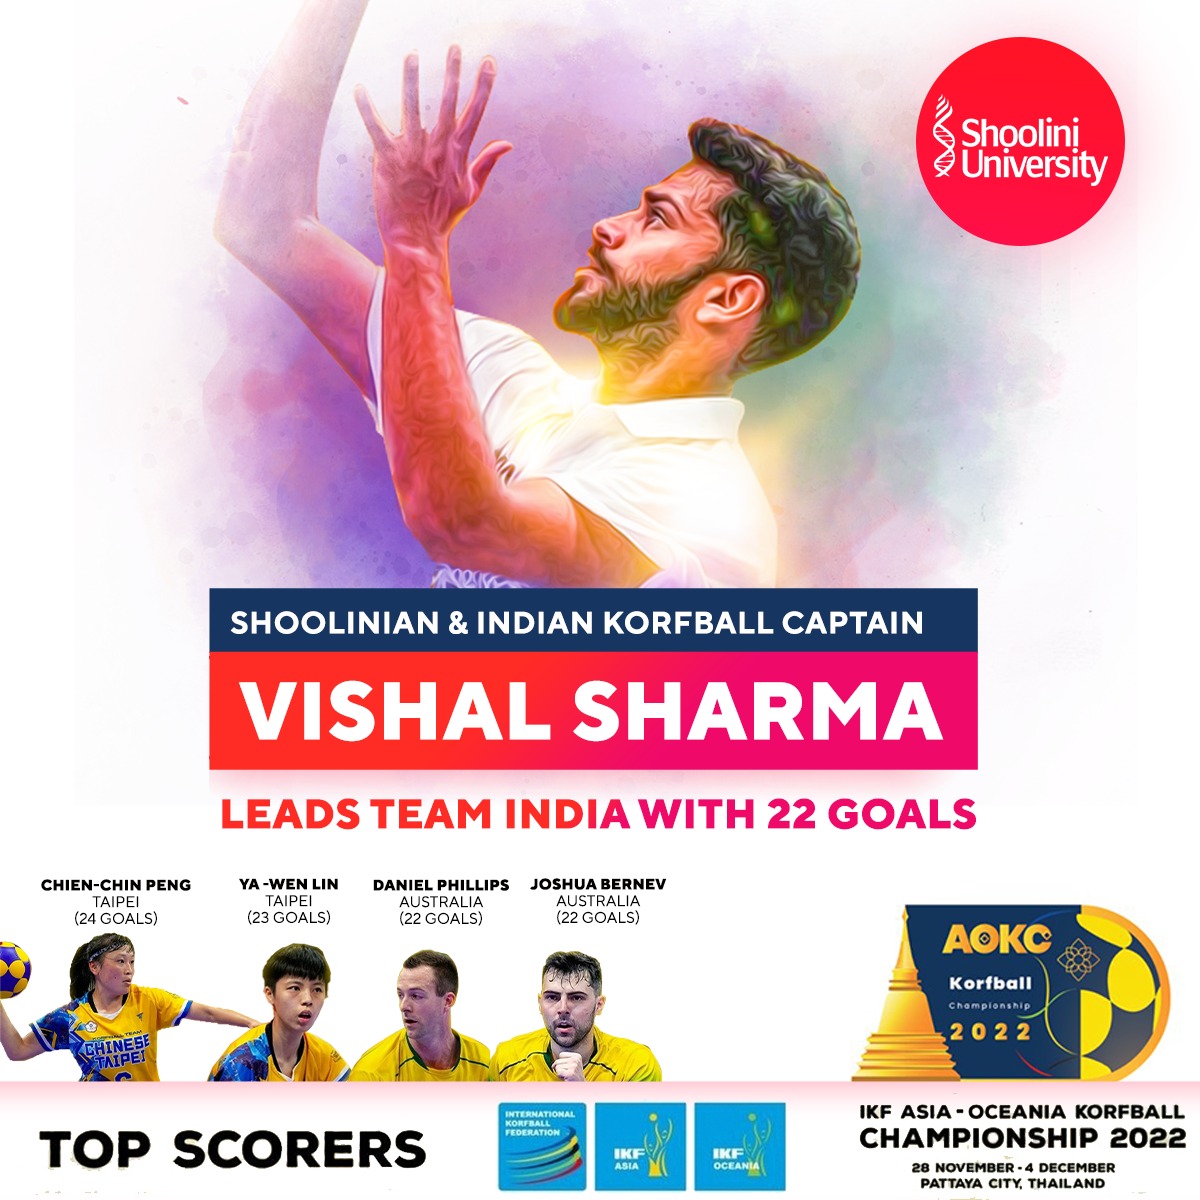 Our student Vishal Sharma became the highest scorer (Male) at the Asia-Oceania Korfball Championship in Thailand.

#korfball #InternationalKorfball2022 #Morocco #IndianKorfball #Korfballteam #Captian #IndianTeam #IndianKorfball #ShooliniUniversity #ThinkLearning #ThinkSuccess